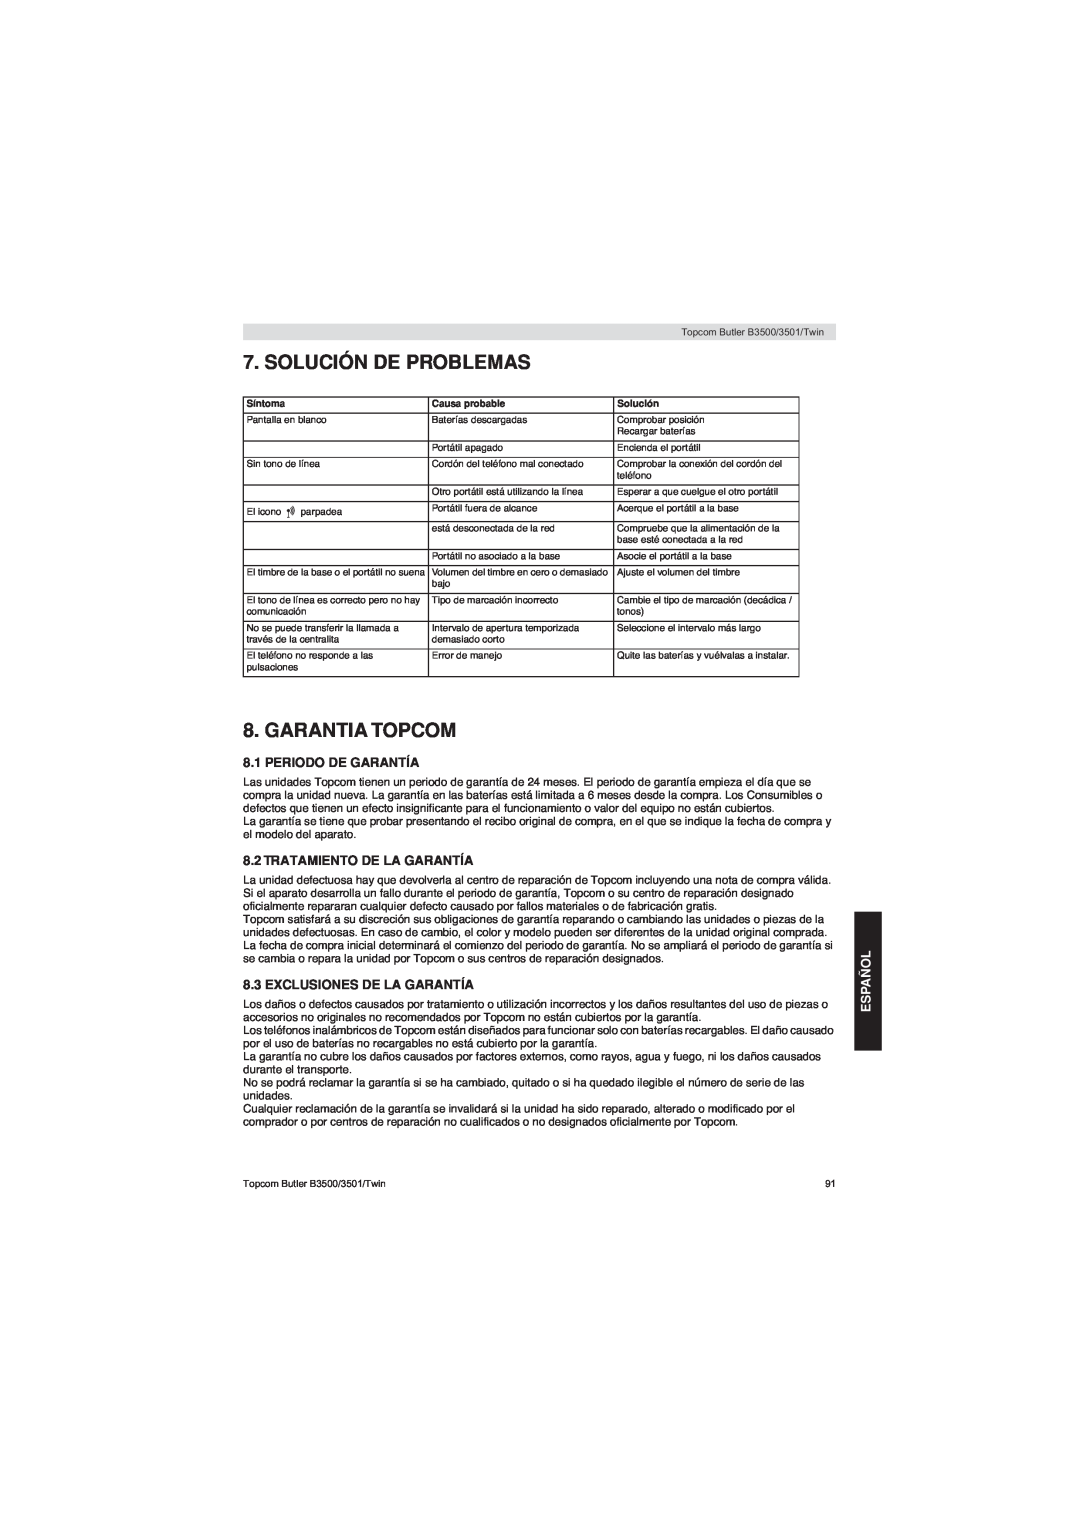 Topcom BUTLER 3500 manual Solución De Problemas, Garantia Topcom, Periodo De Garantía, Tratamiento De La Garantía, Español 